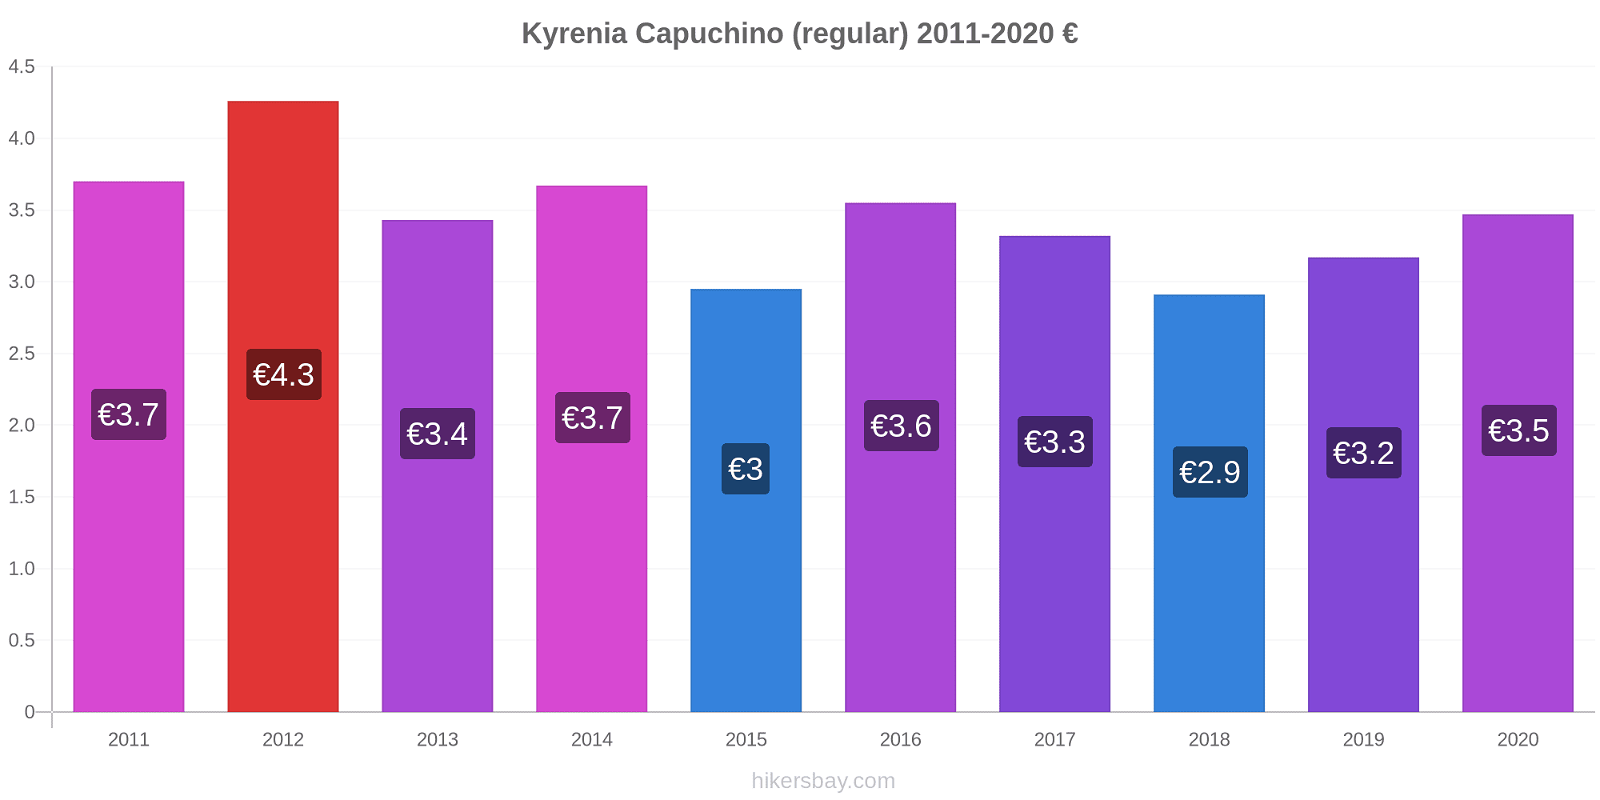 Kyrenia cambios de precios Capuchino (regular) hikersbay.com